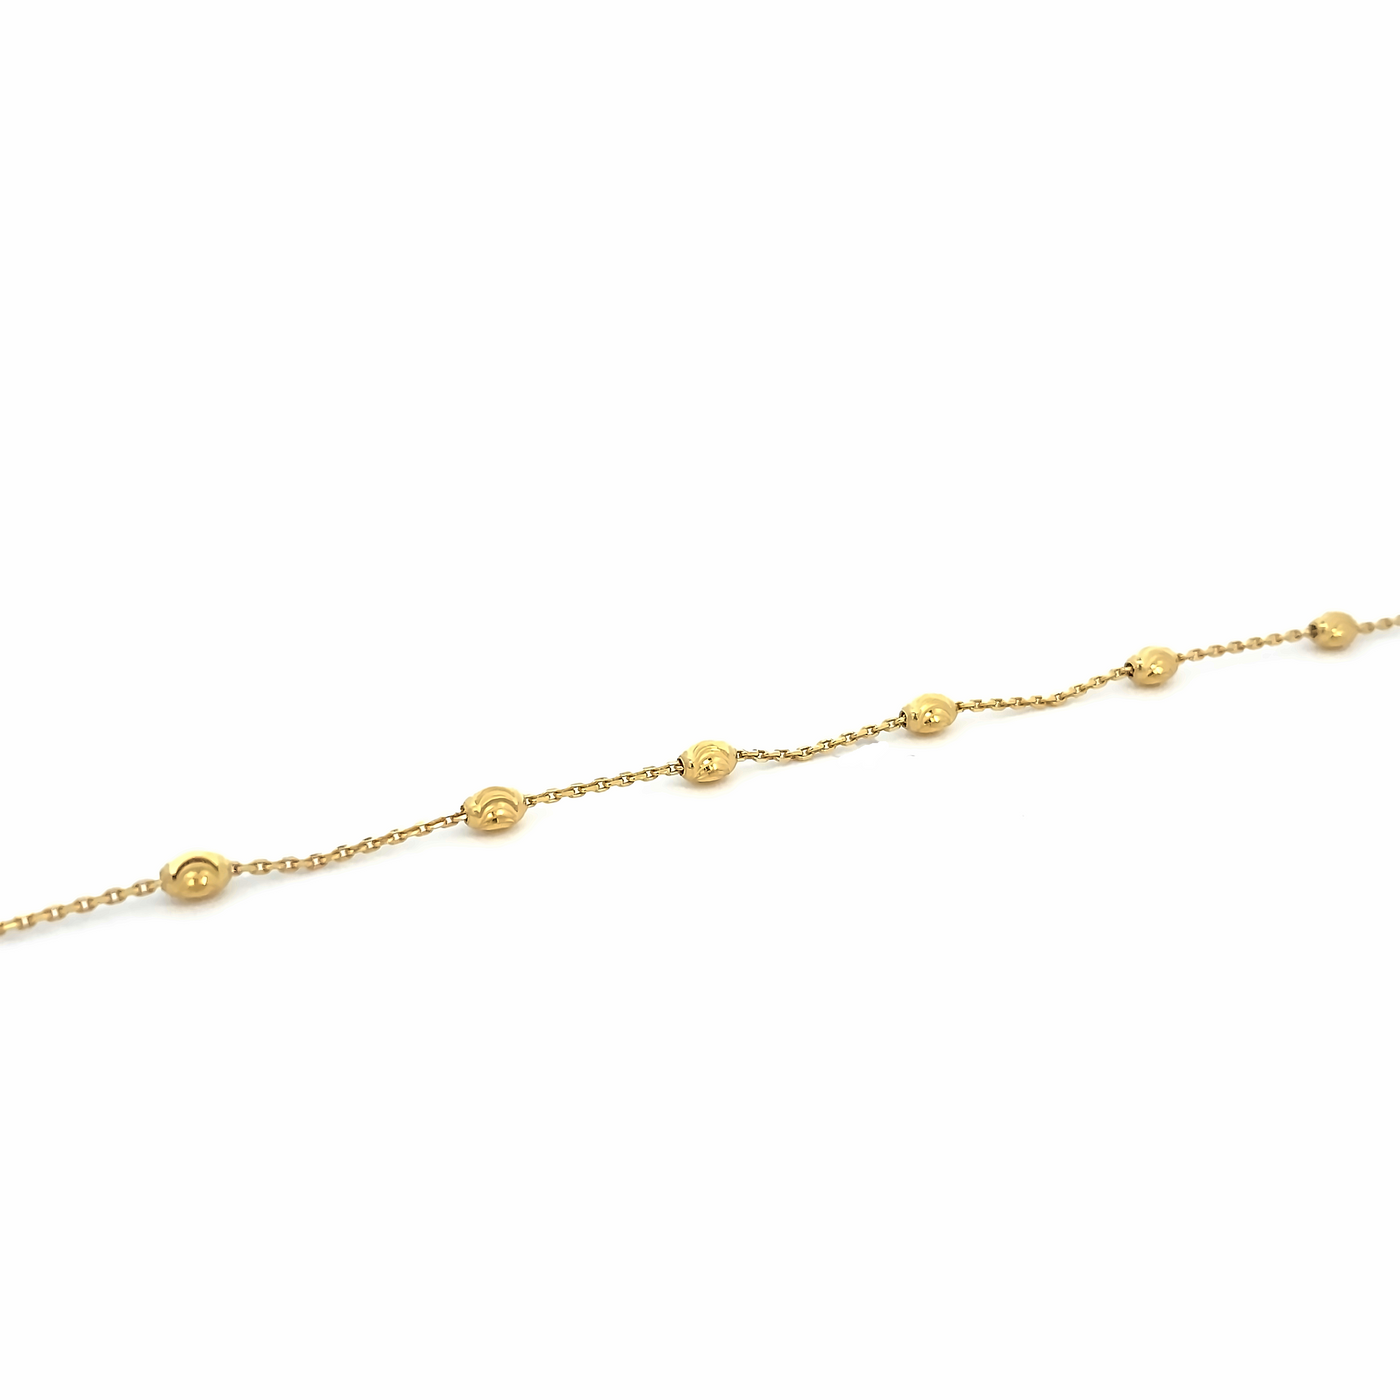 10 Karat Yellow Gold Oval Bead Chain Bracelet